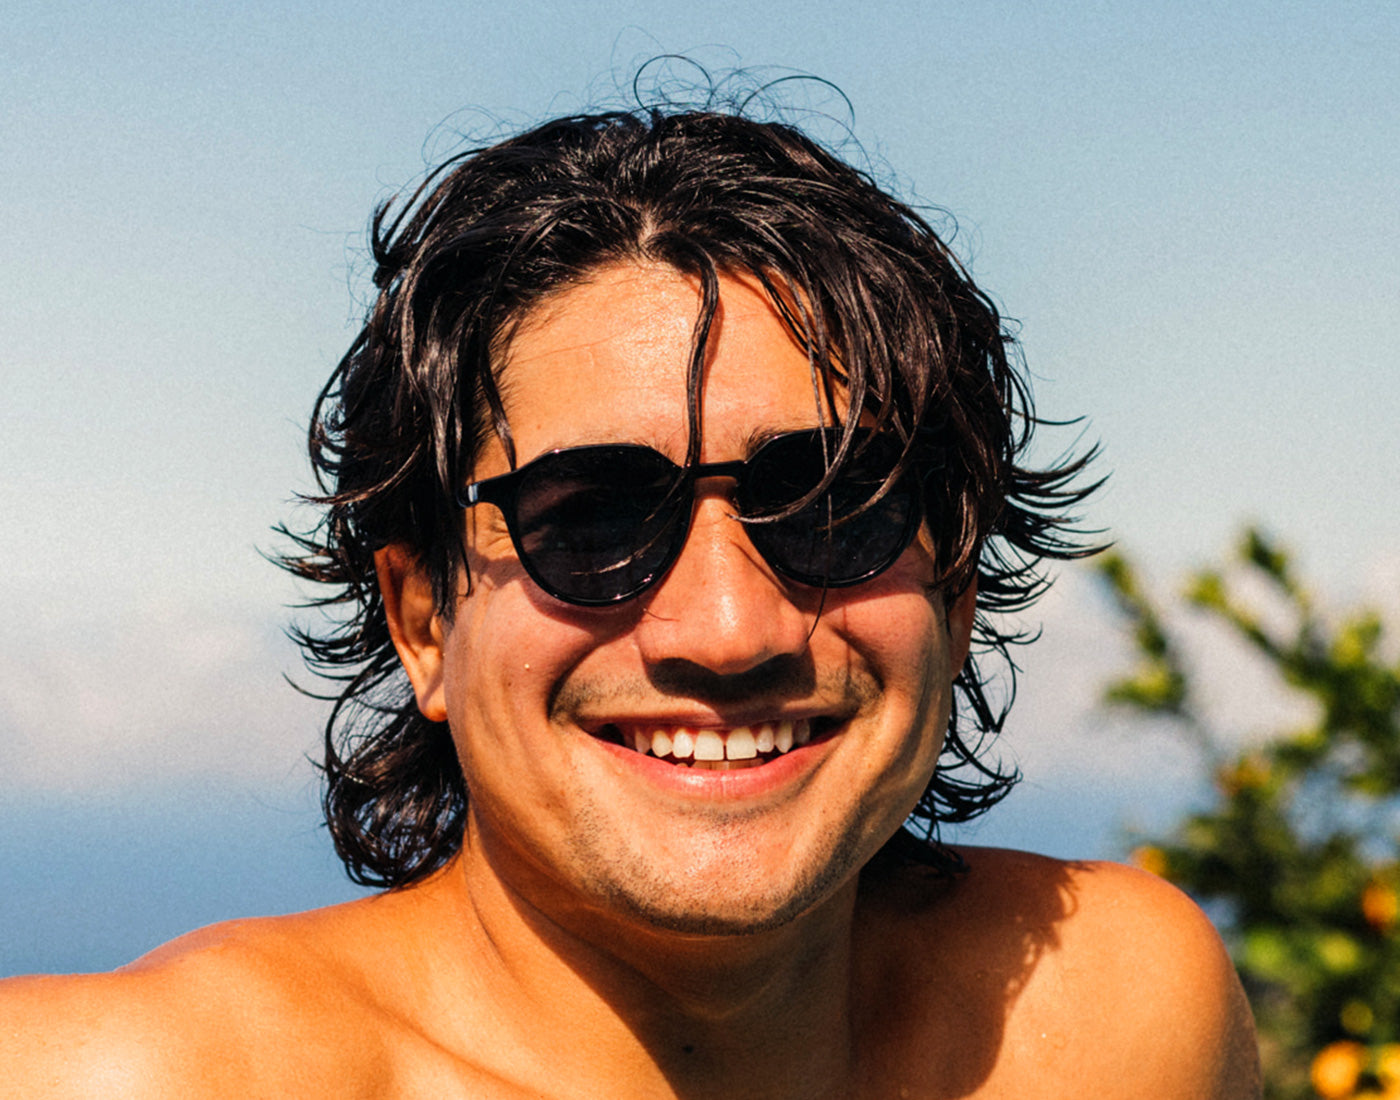 guy wearing sunski vallarta sunglasses smiling